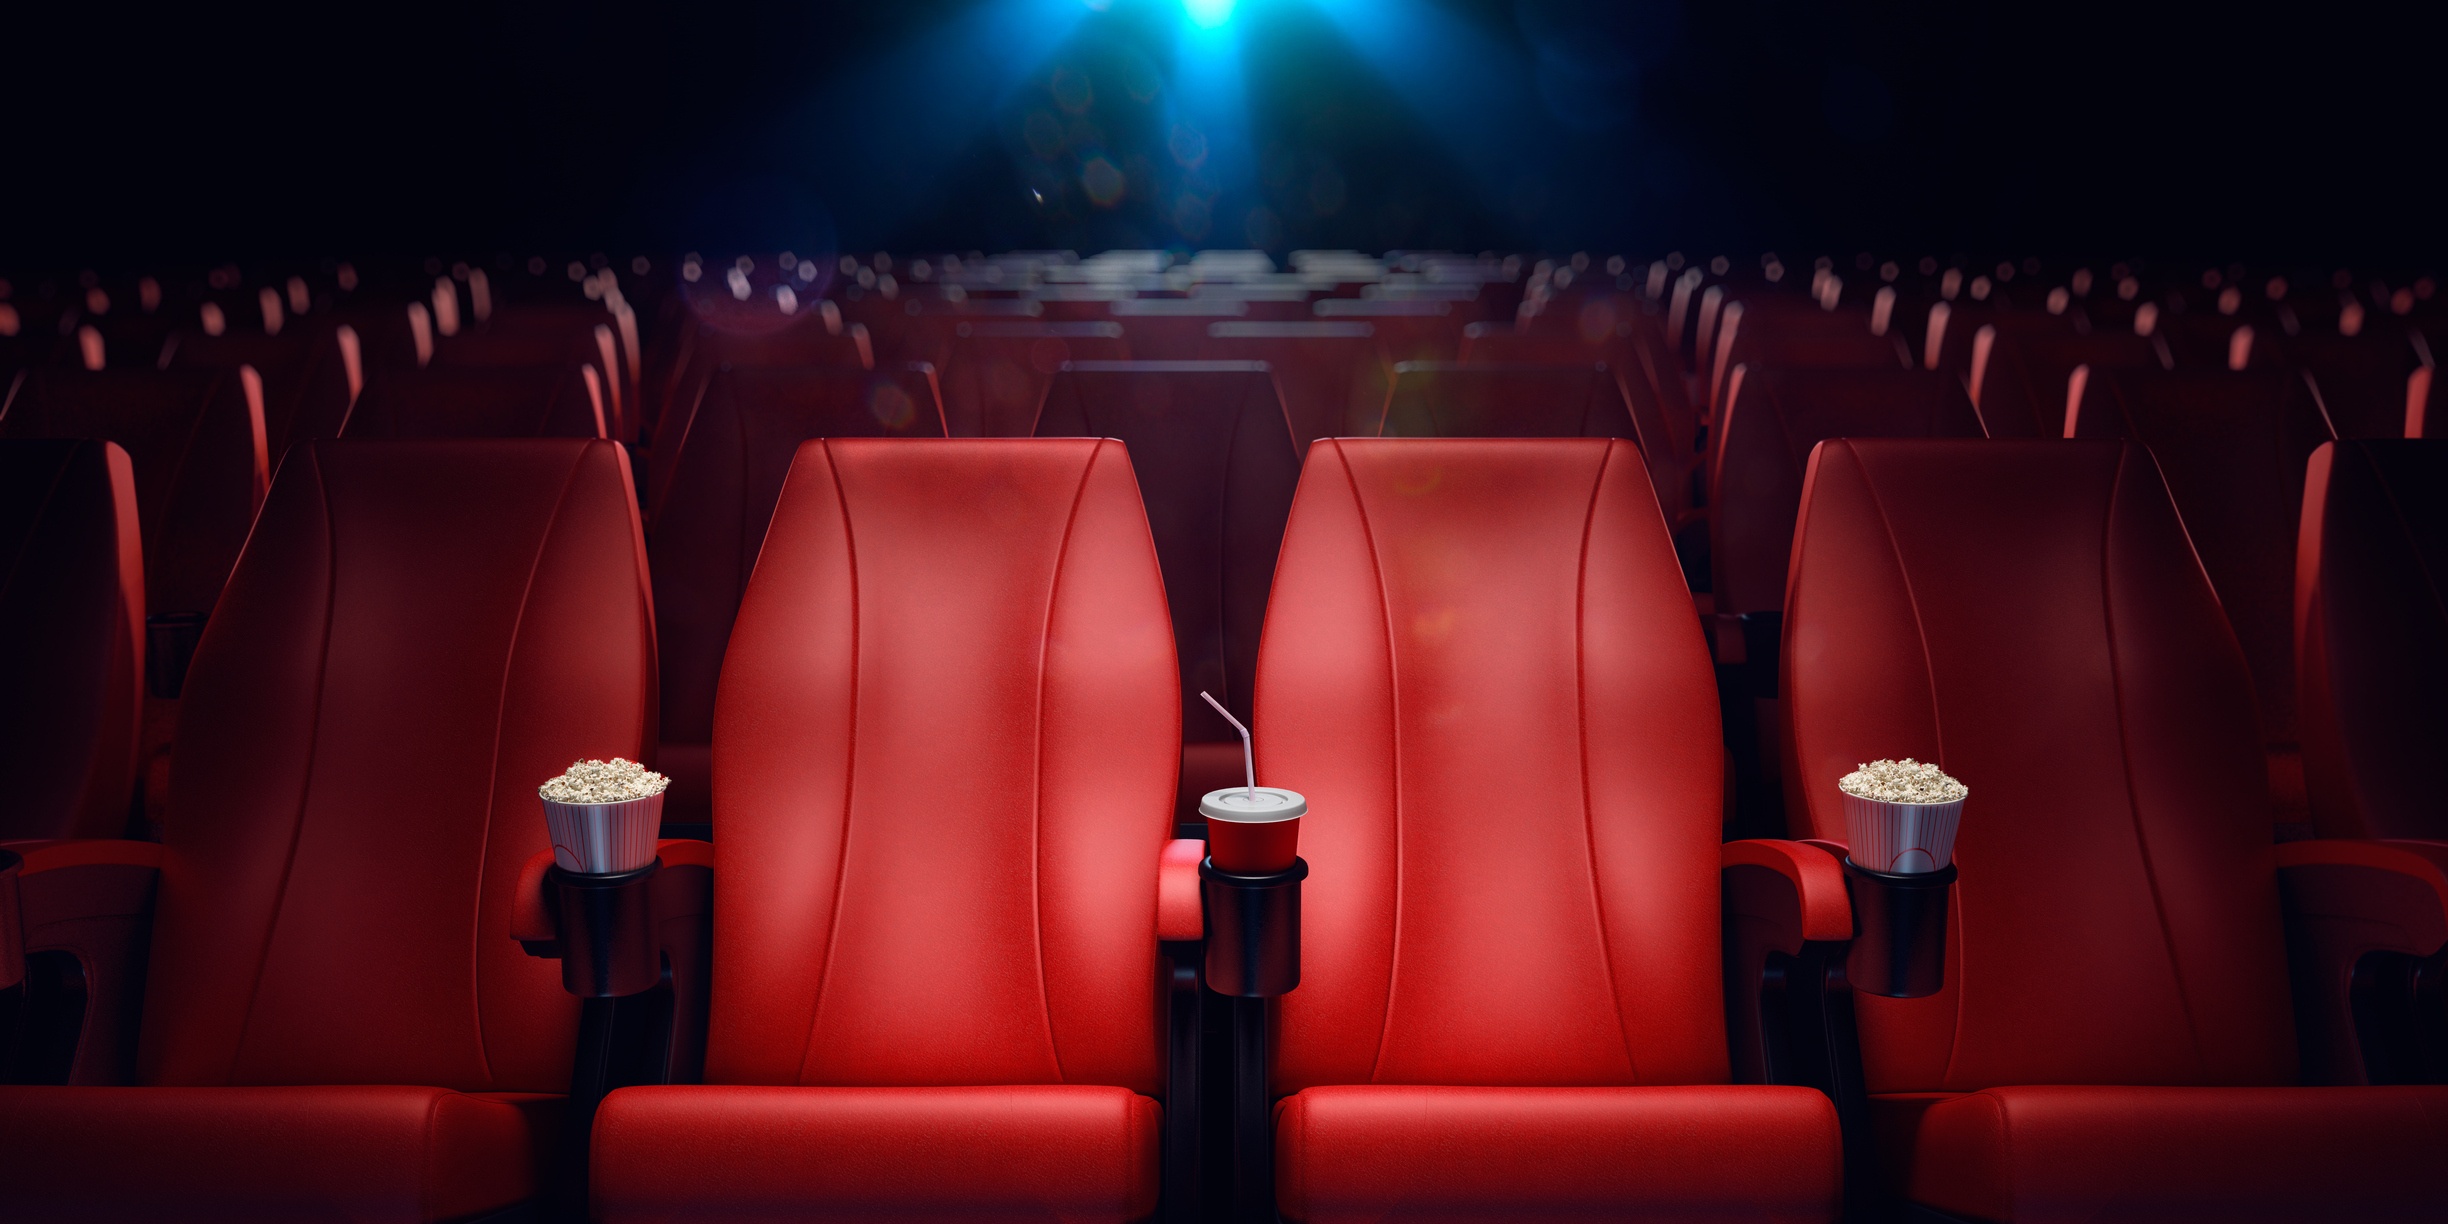 電影院關閉 大片只能延期或改上串流Movie Industry Suffers as Blockbusters Cancelled or Postponed